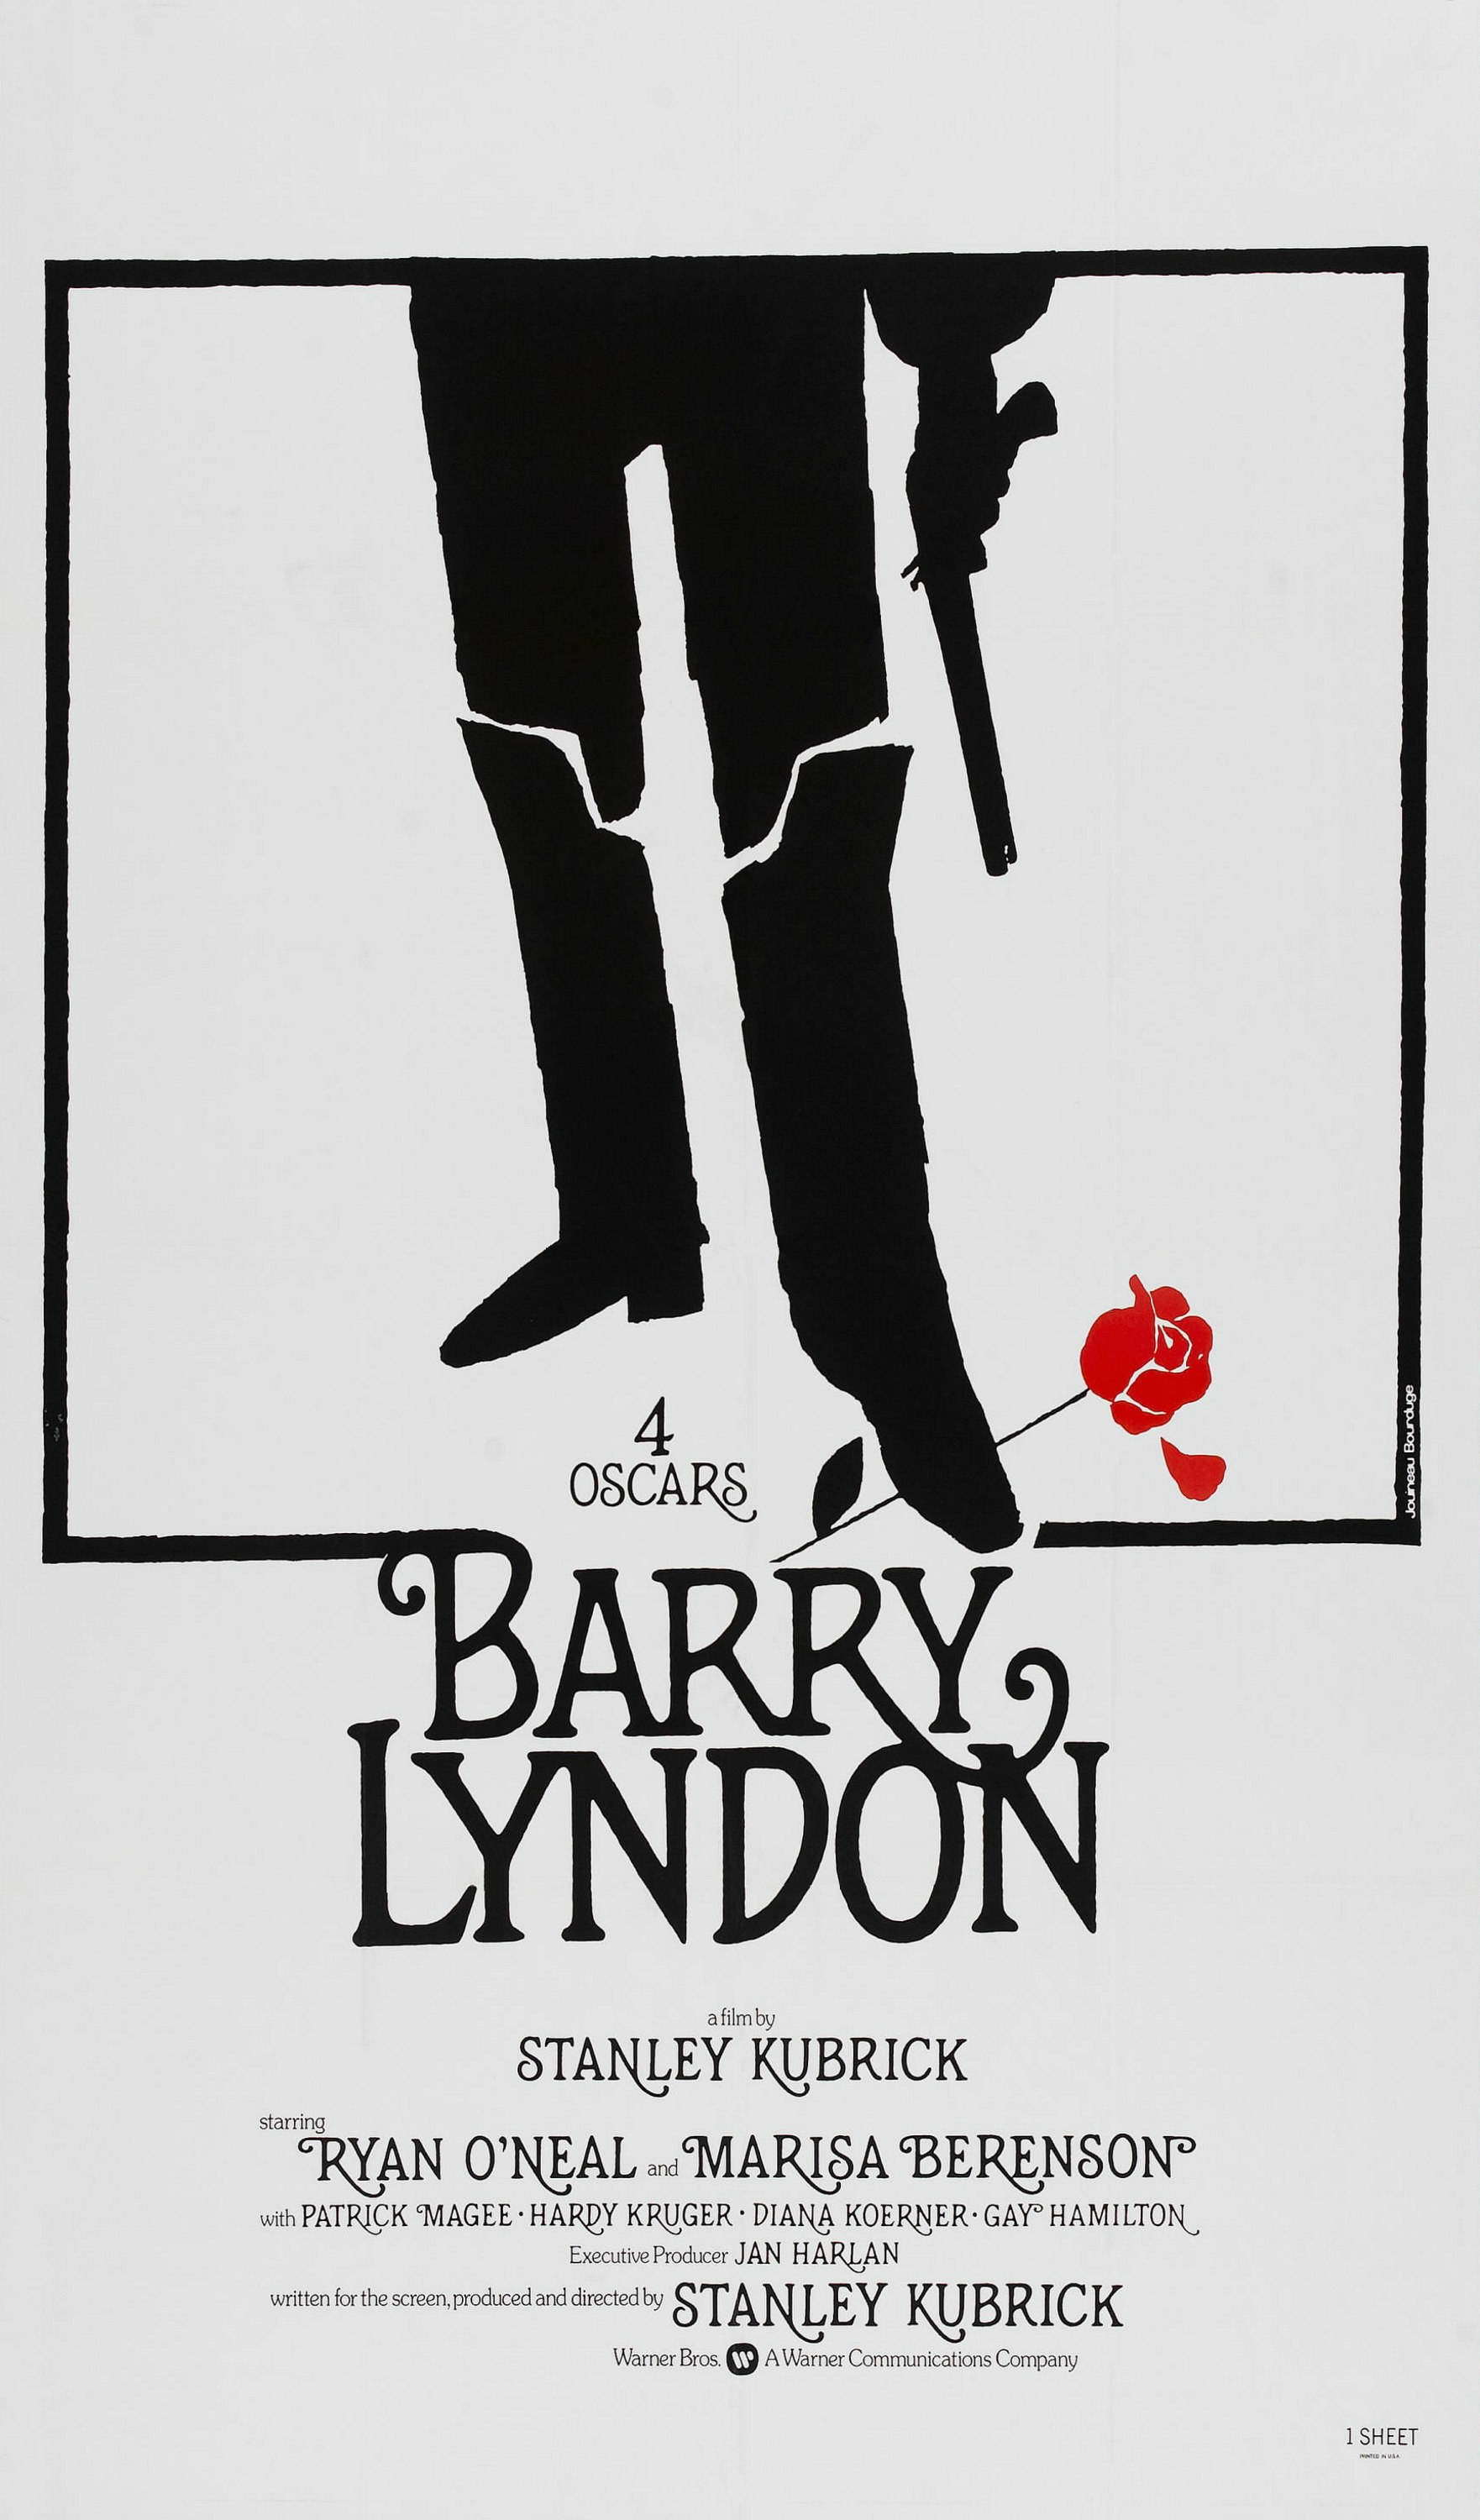 Barry Lyndon poster